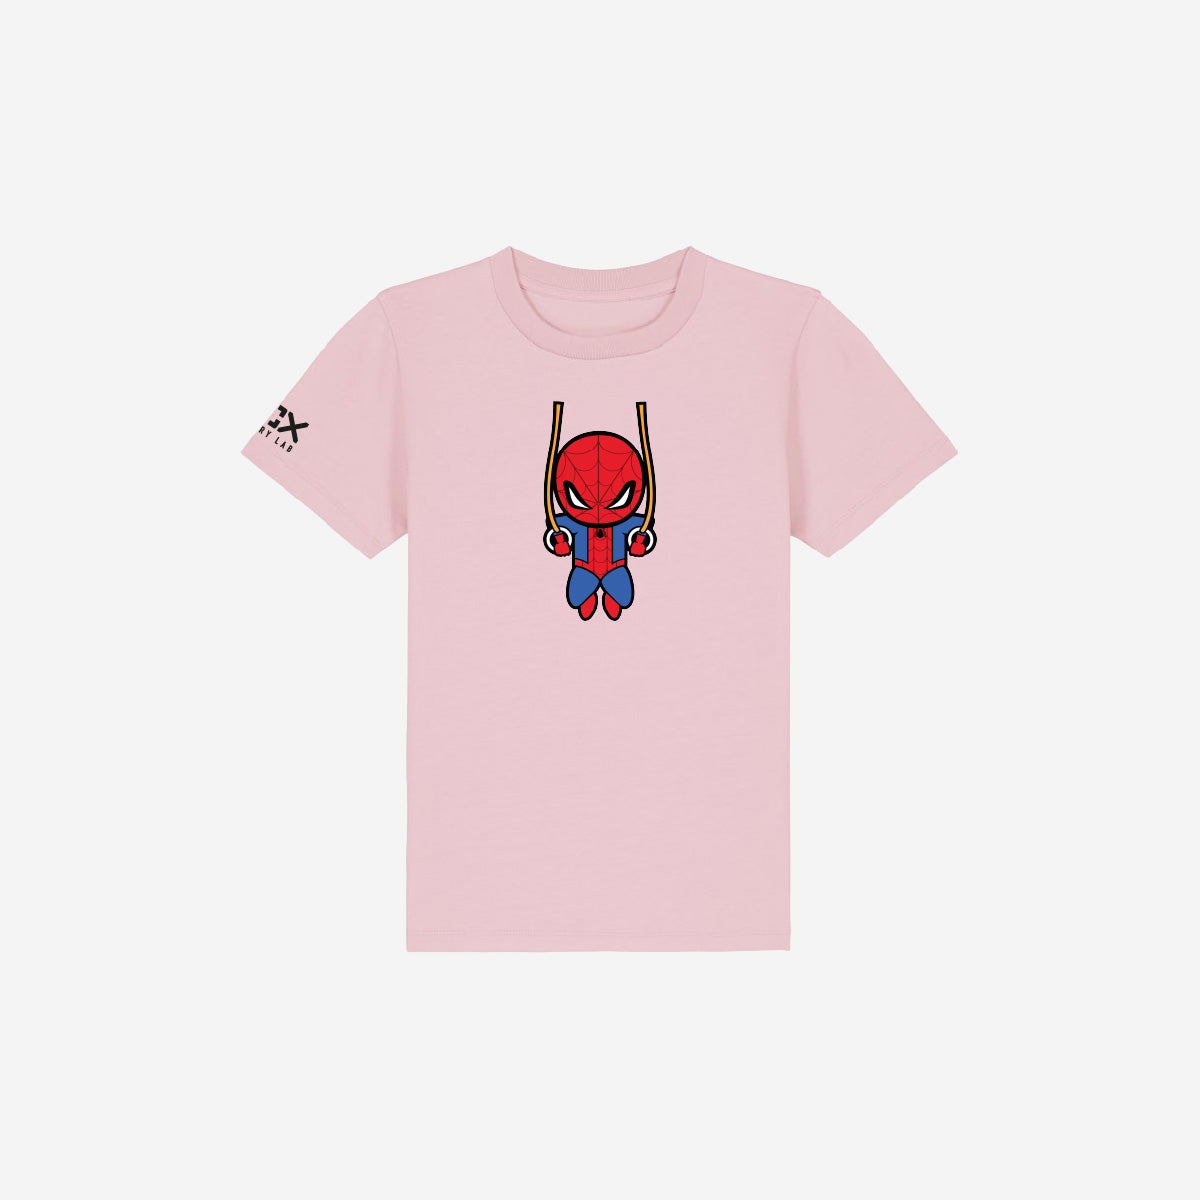 Tshirt bambini - Spiderman 2